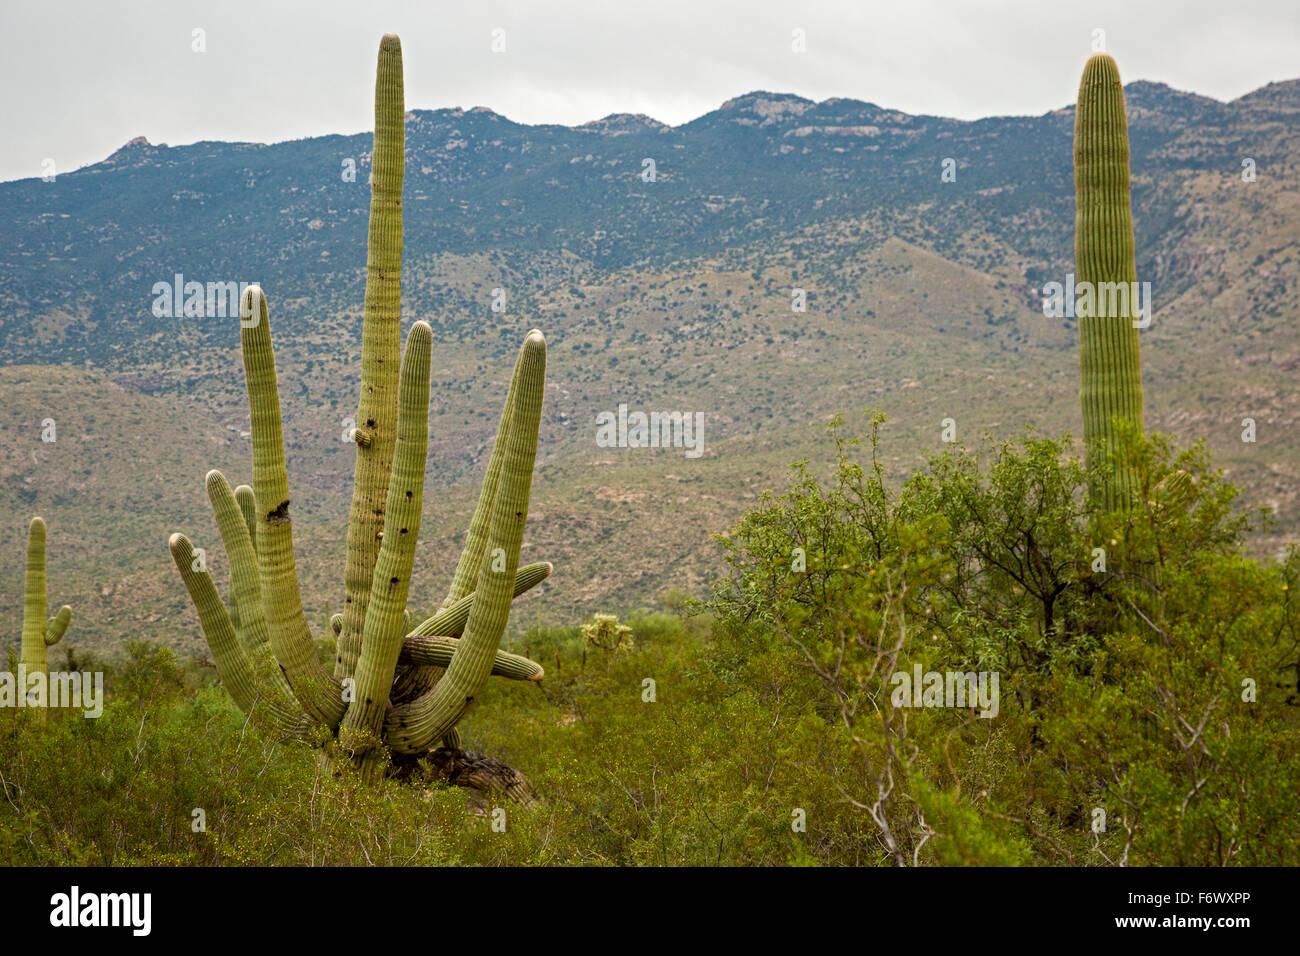 Tucson, Arizona - Giant saguaro cacti in Saguaro National Park. Stock Photo